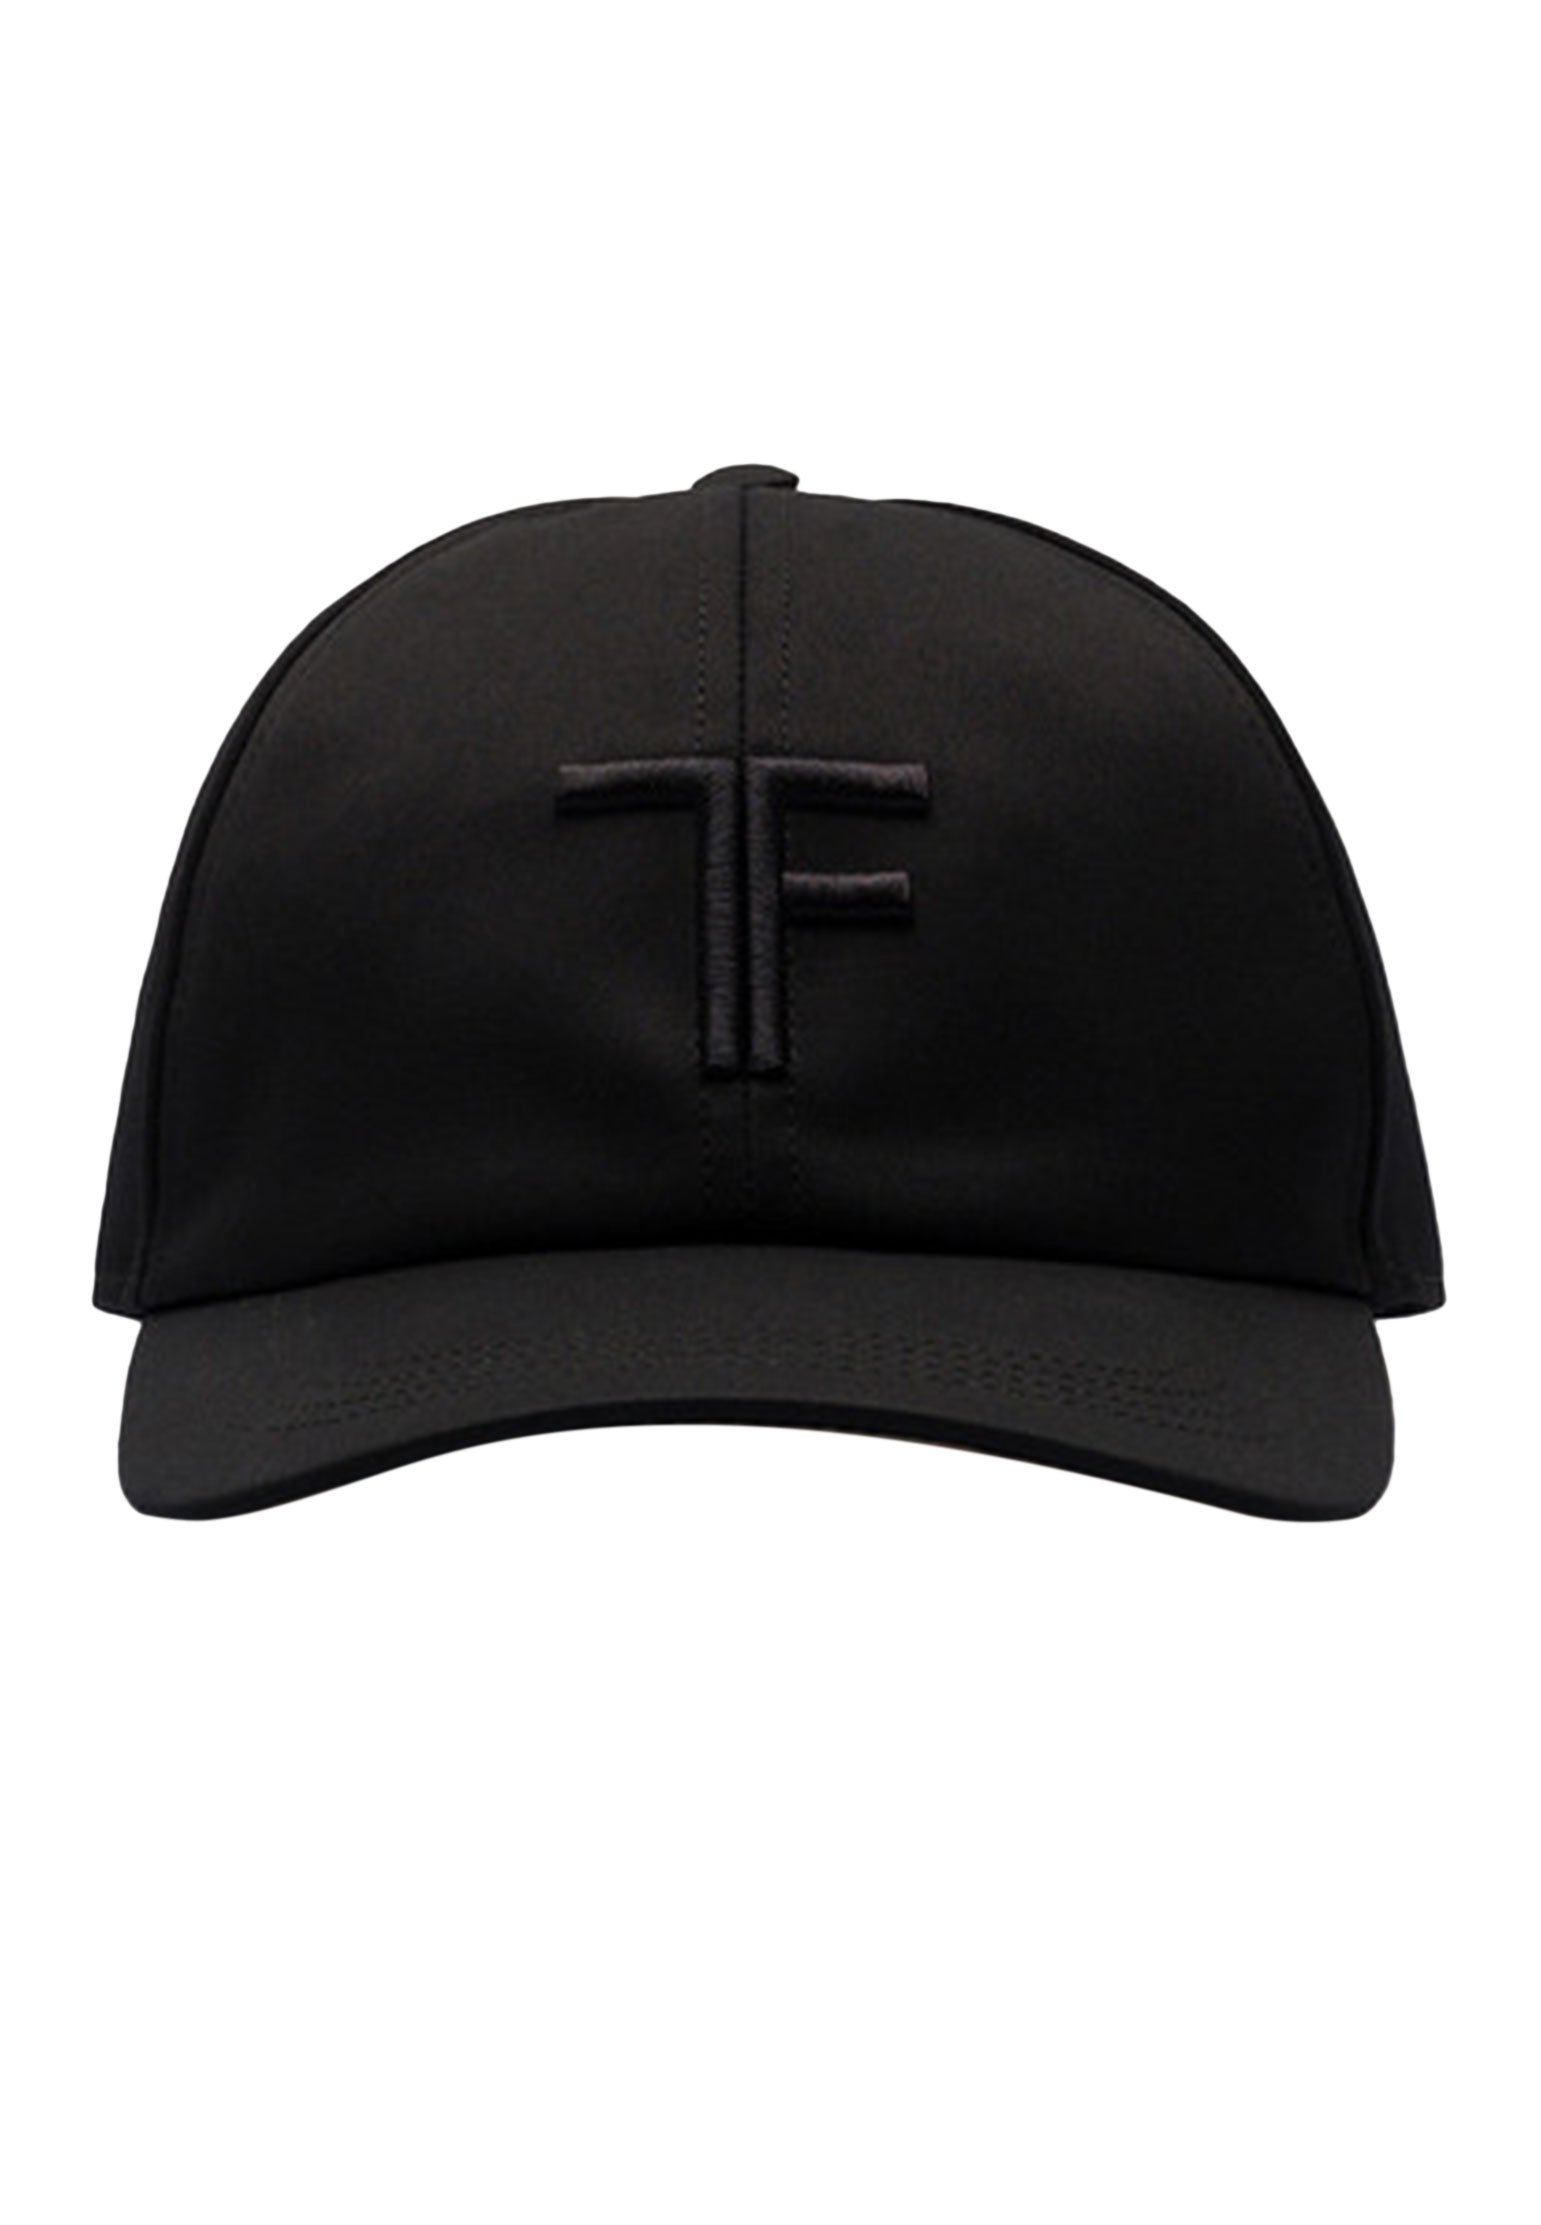 Cap TOM FORD Color: black (Code: 2145) in online store Allure